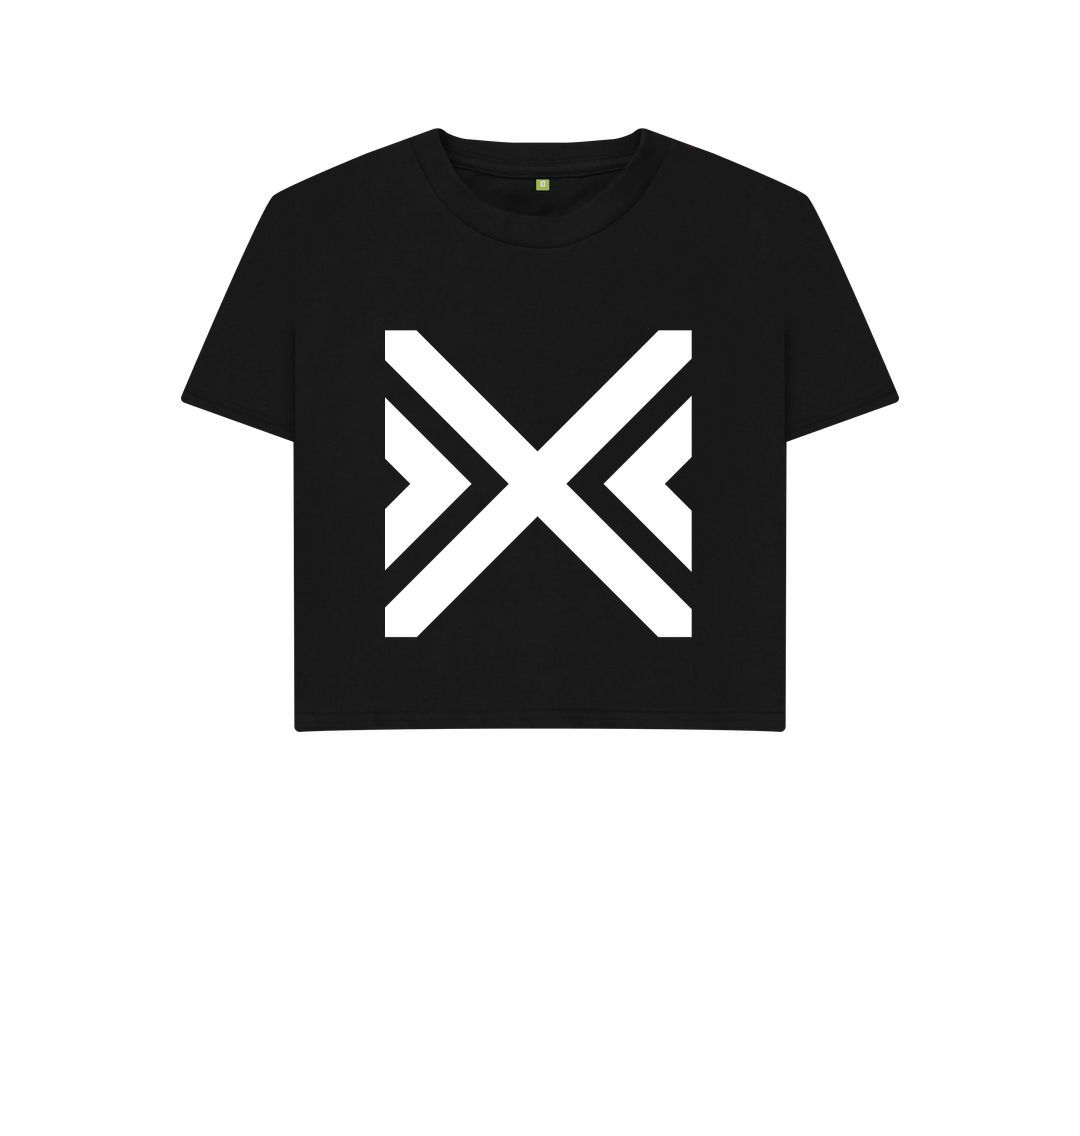 Black Cross T-shirts - Women's Boxy Tees